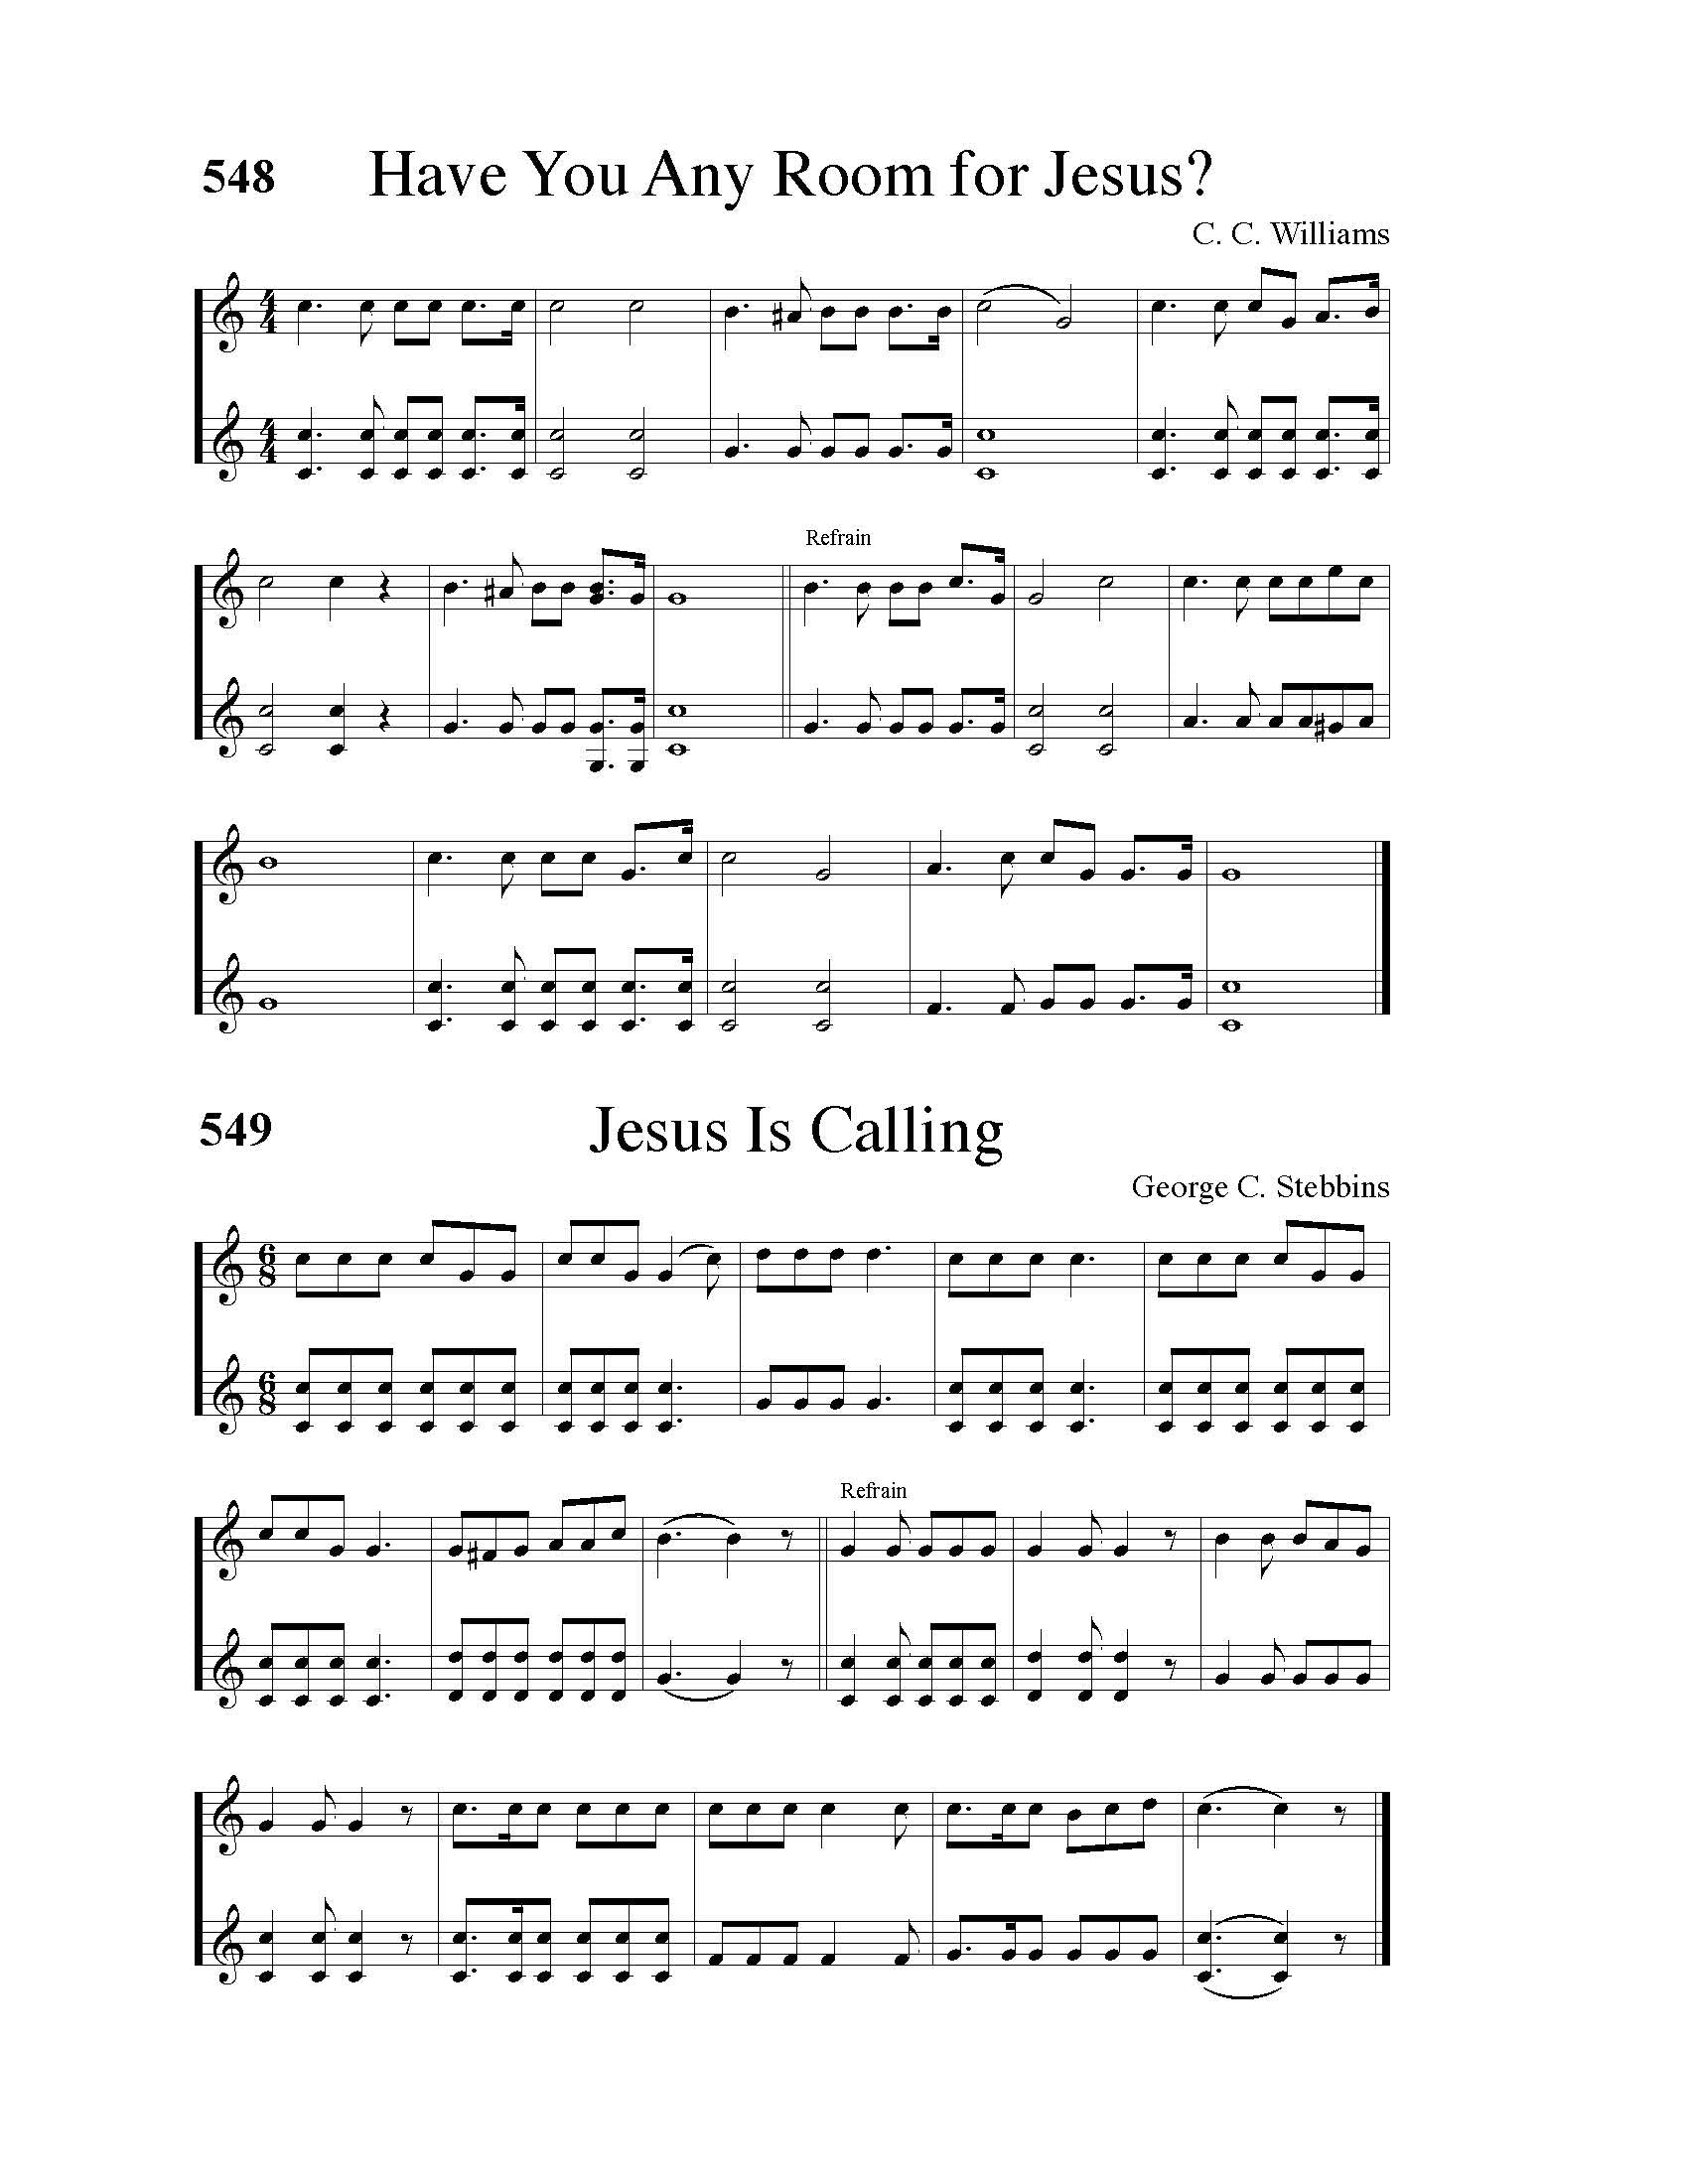 Living Hymns Orchestration: LH13  B flat (Bass Clarinet, Baritone T.C., Tenor Sax)